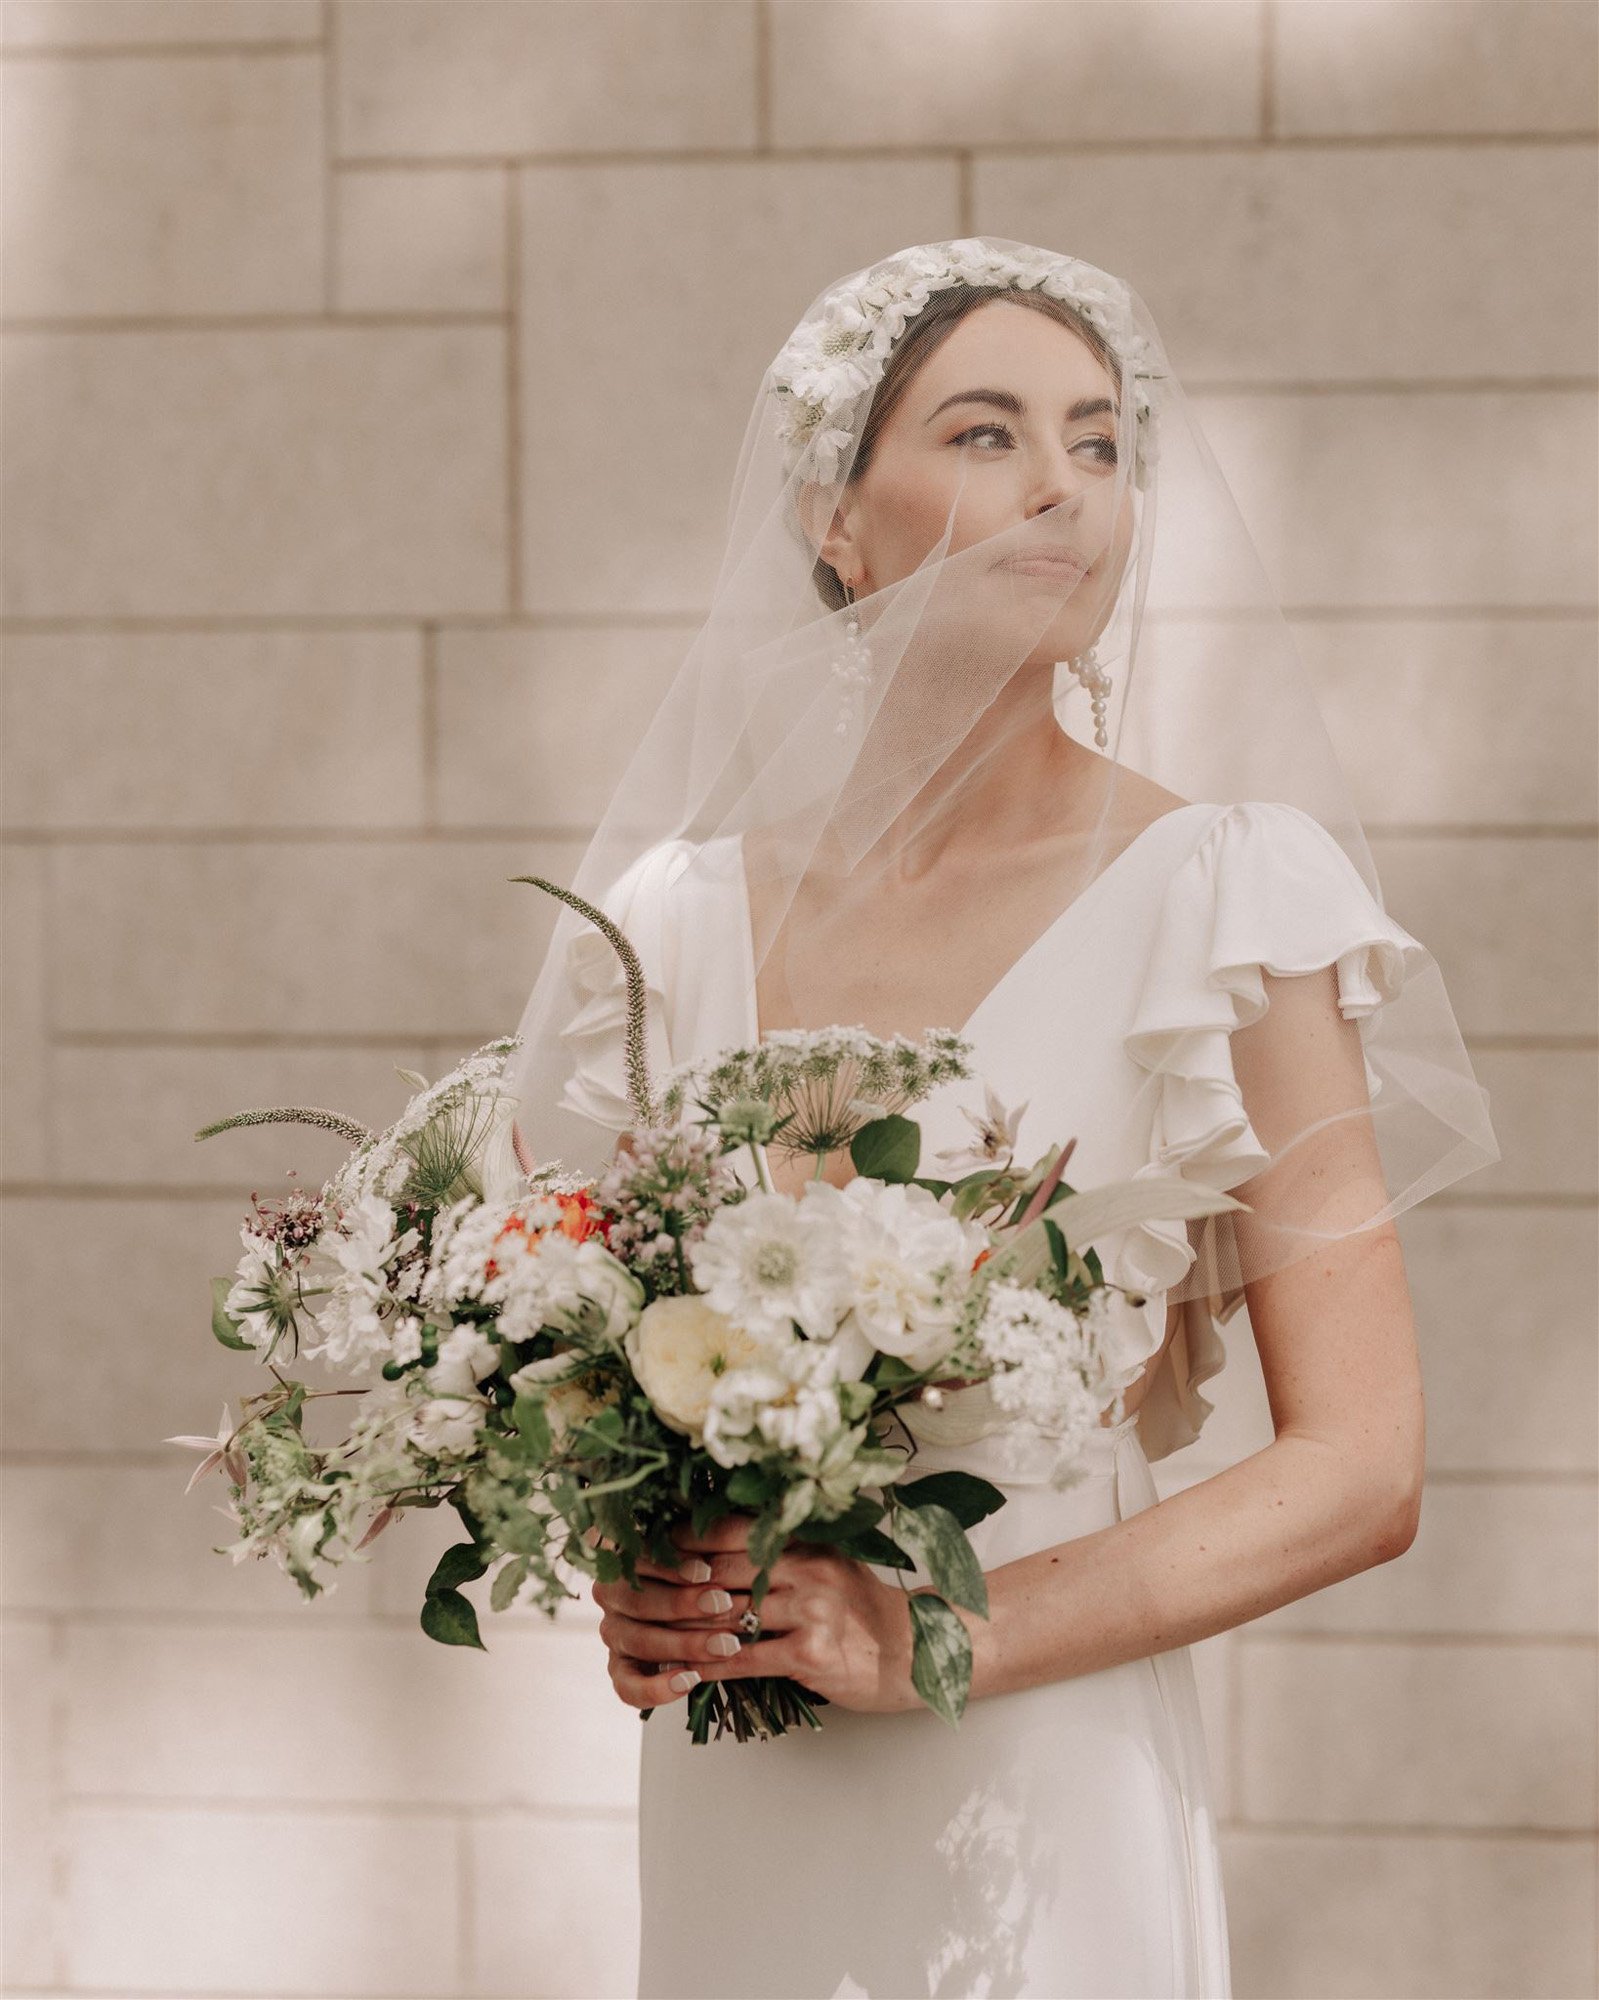 lucy-alexandra-grecco-wedding-dress-anzley-and-matthew-wedding_21.jpg